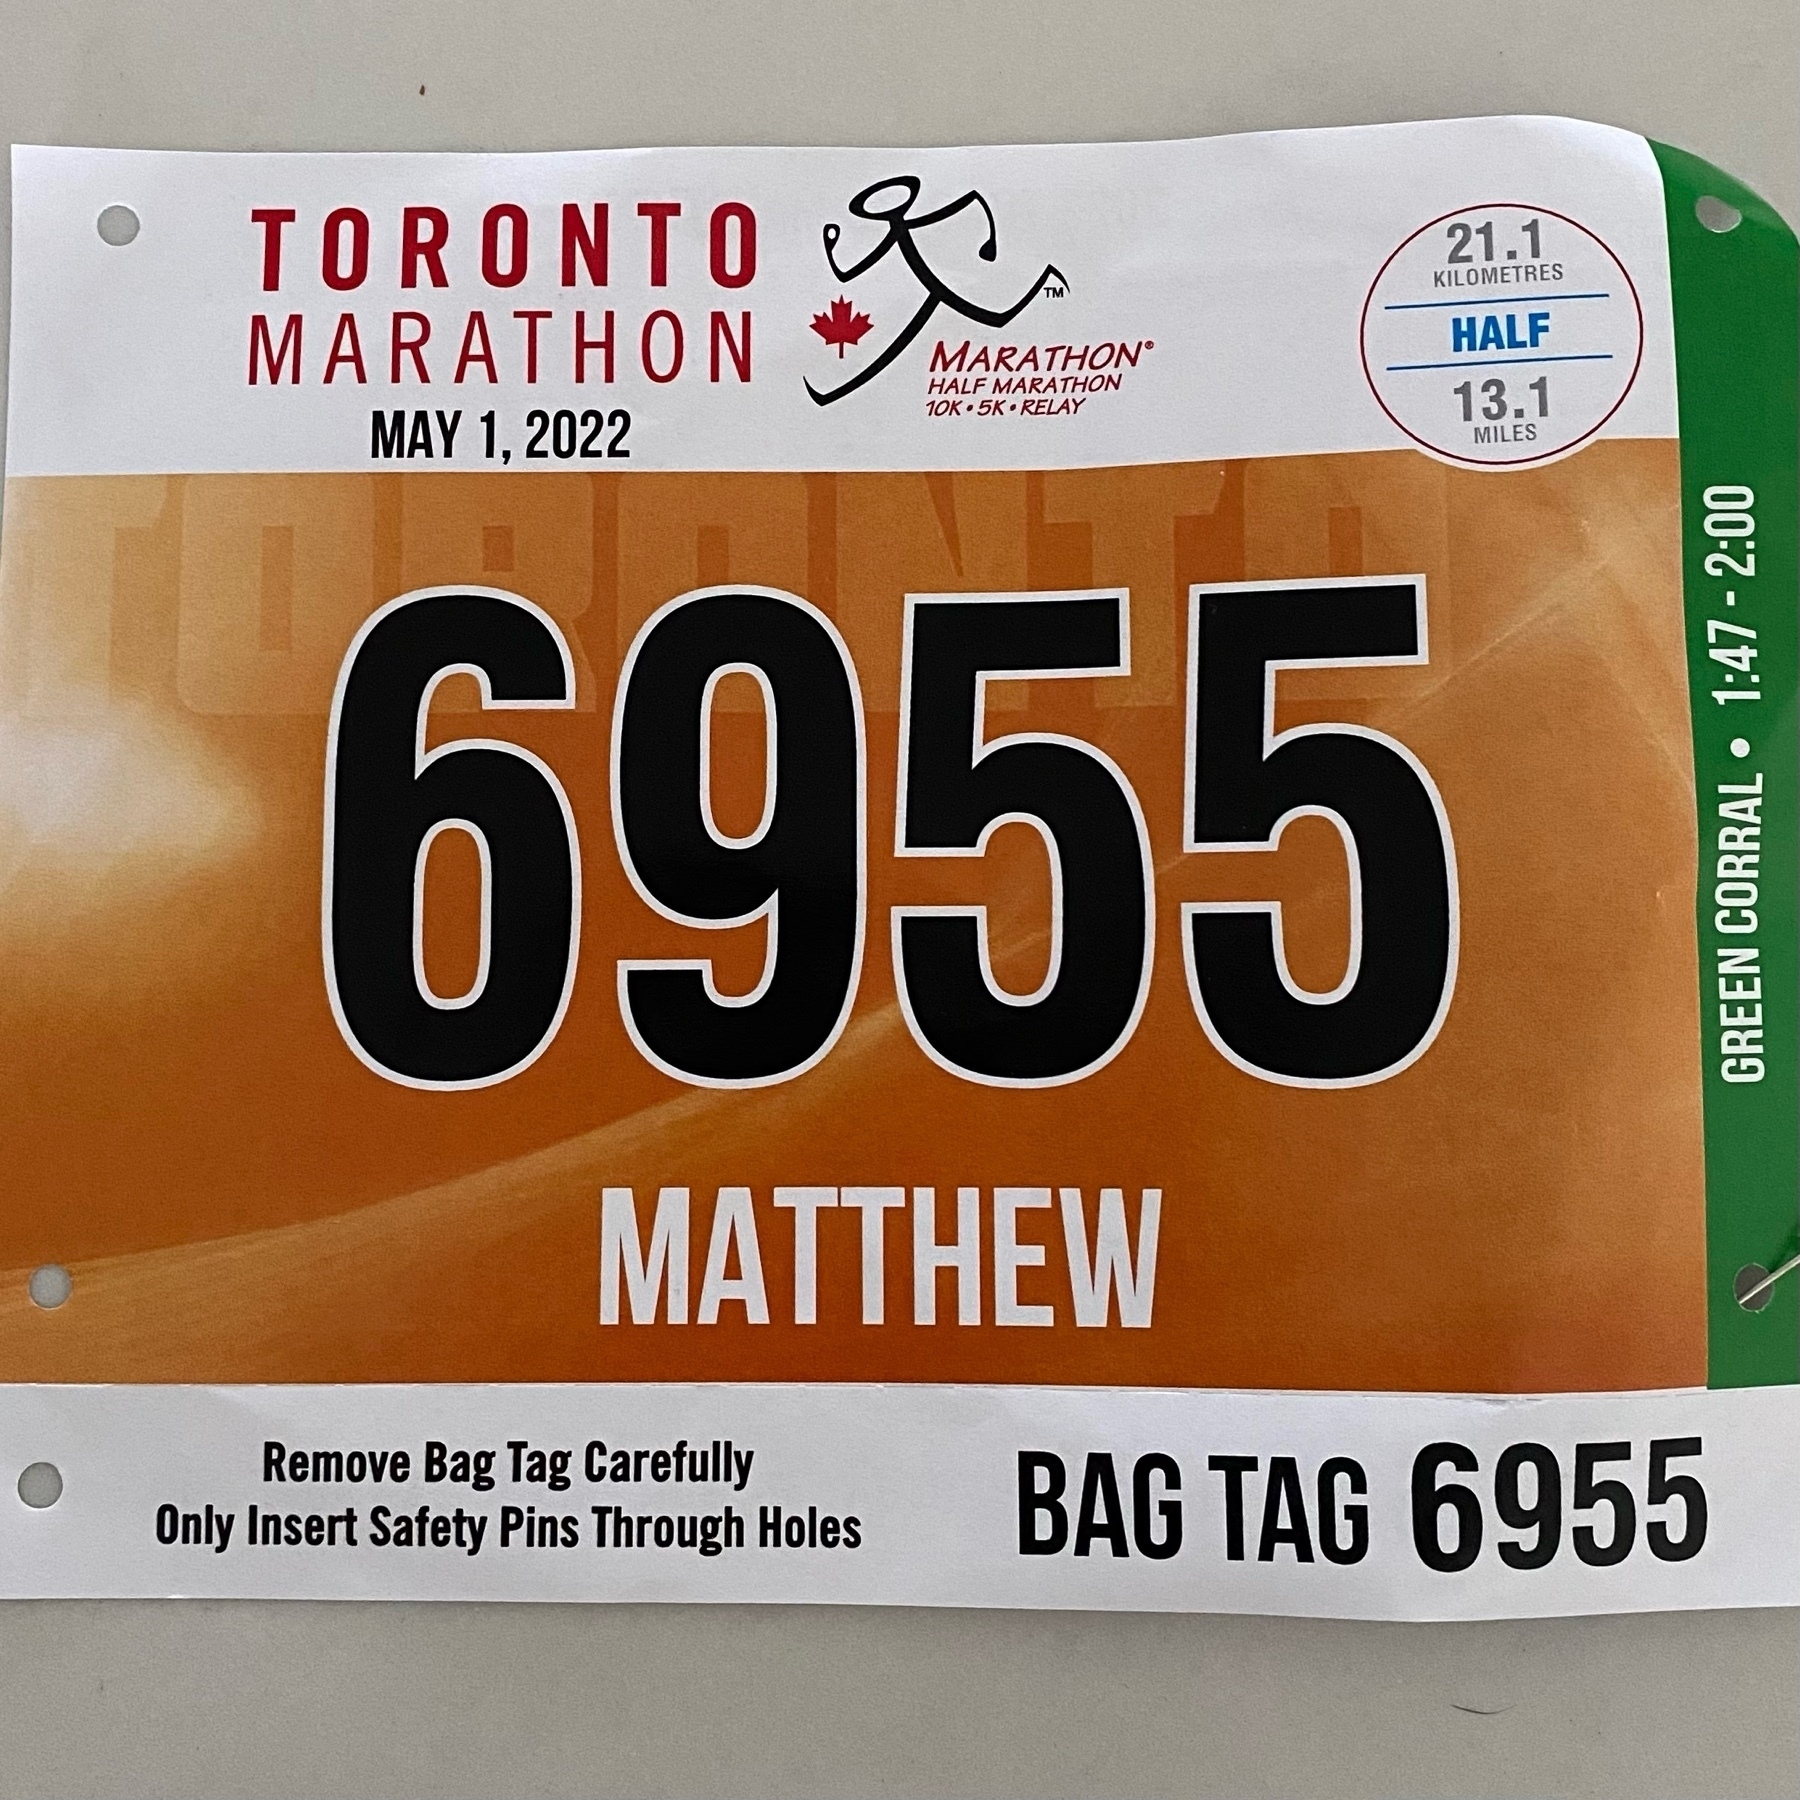 Race bib for the Toronto half marathon